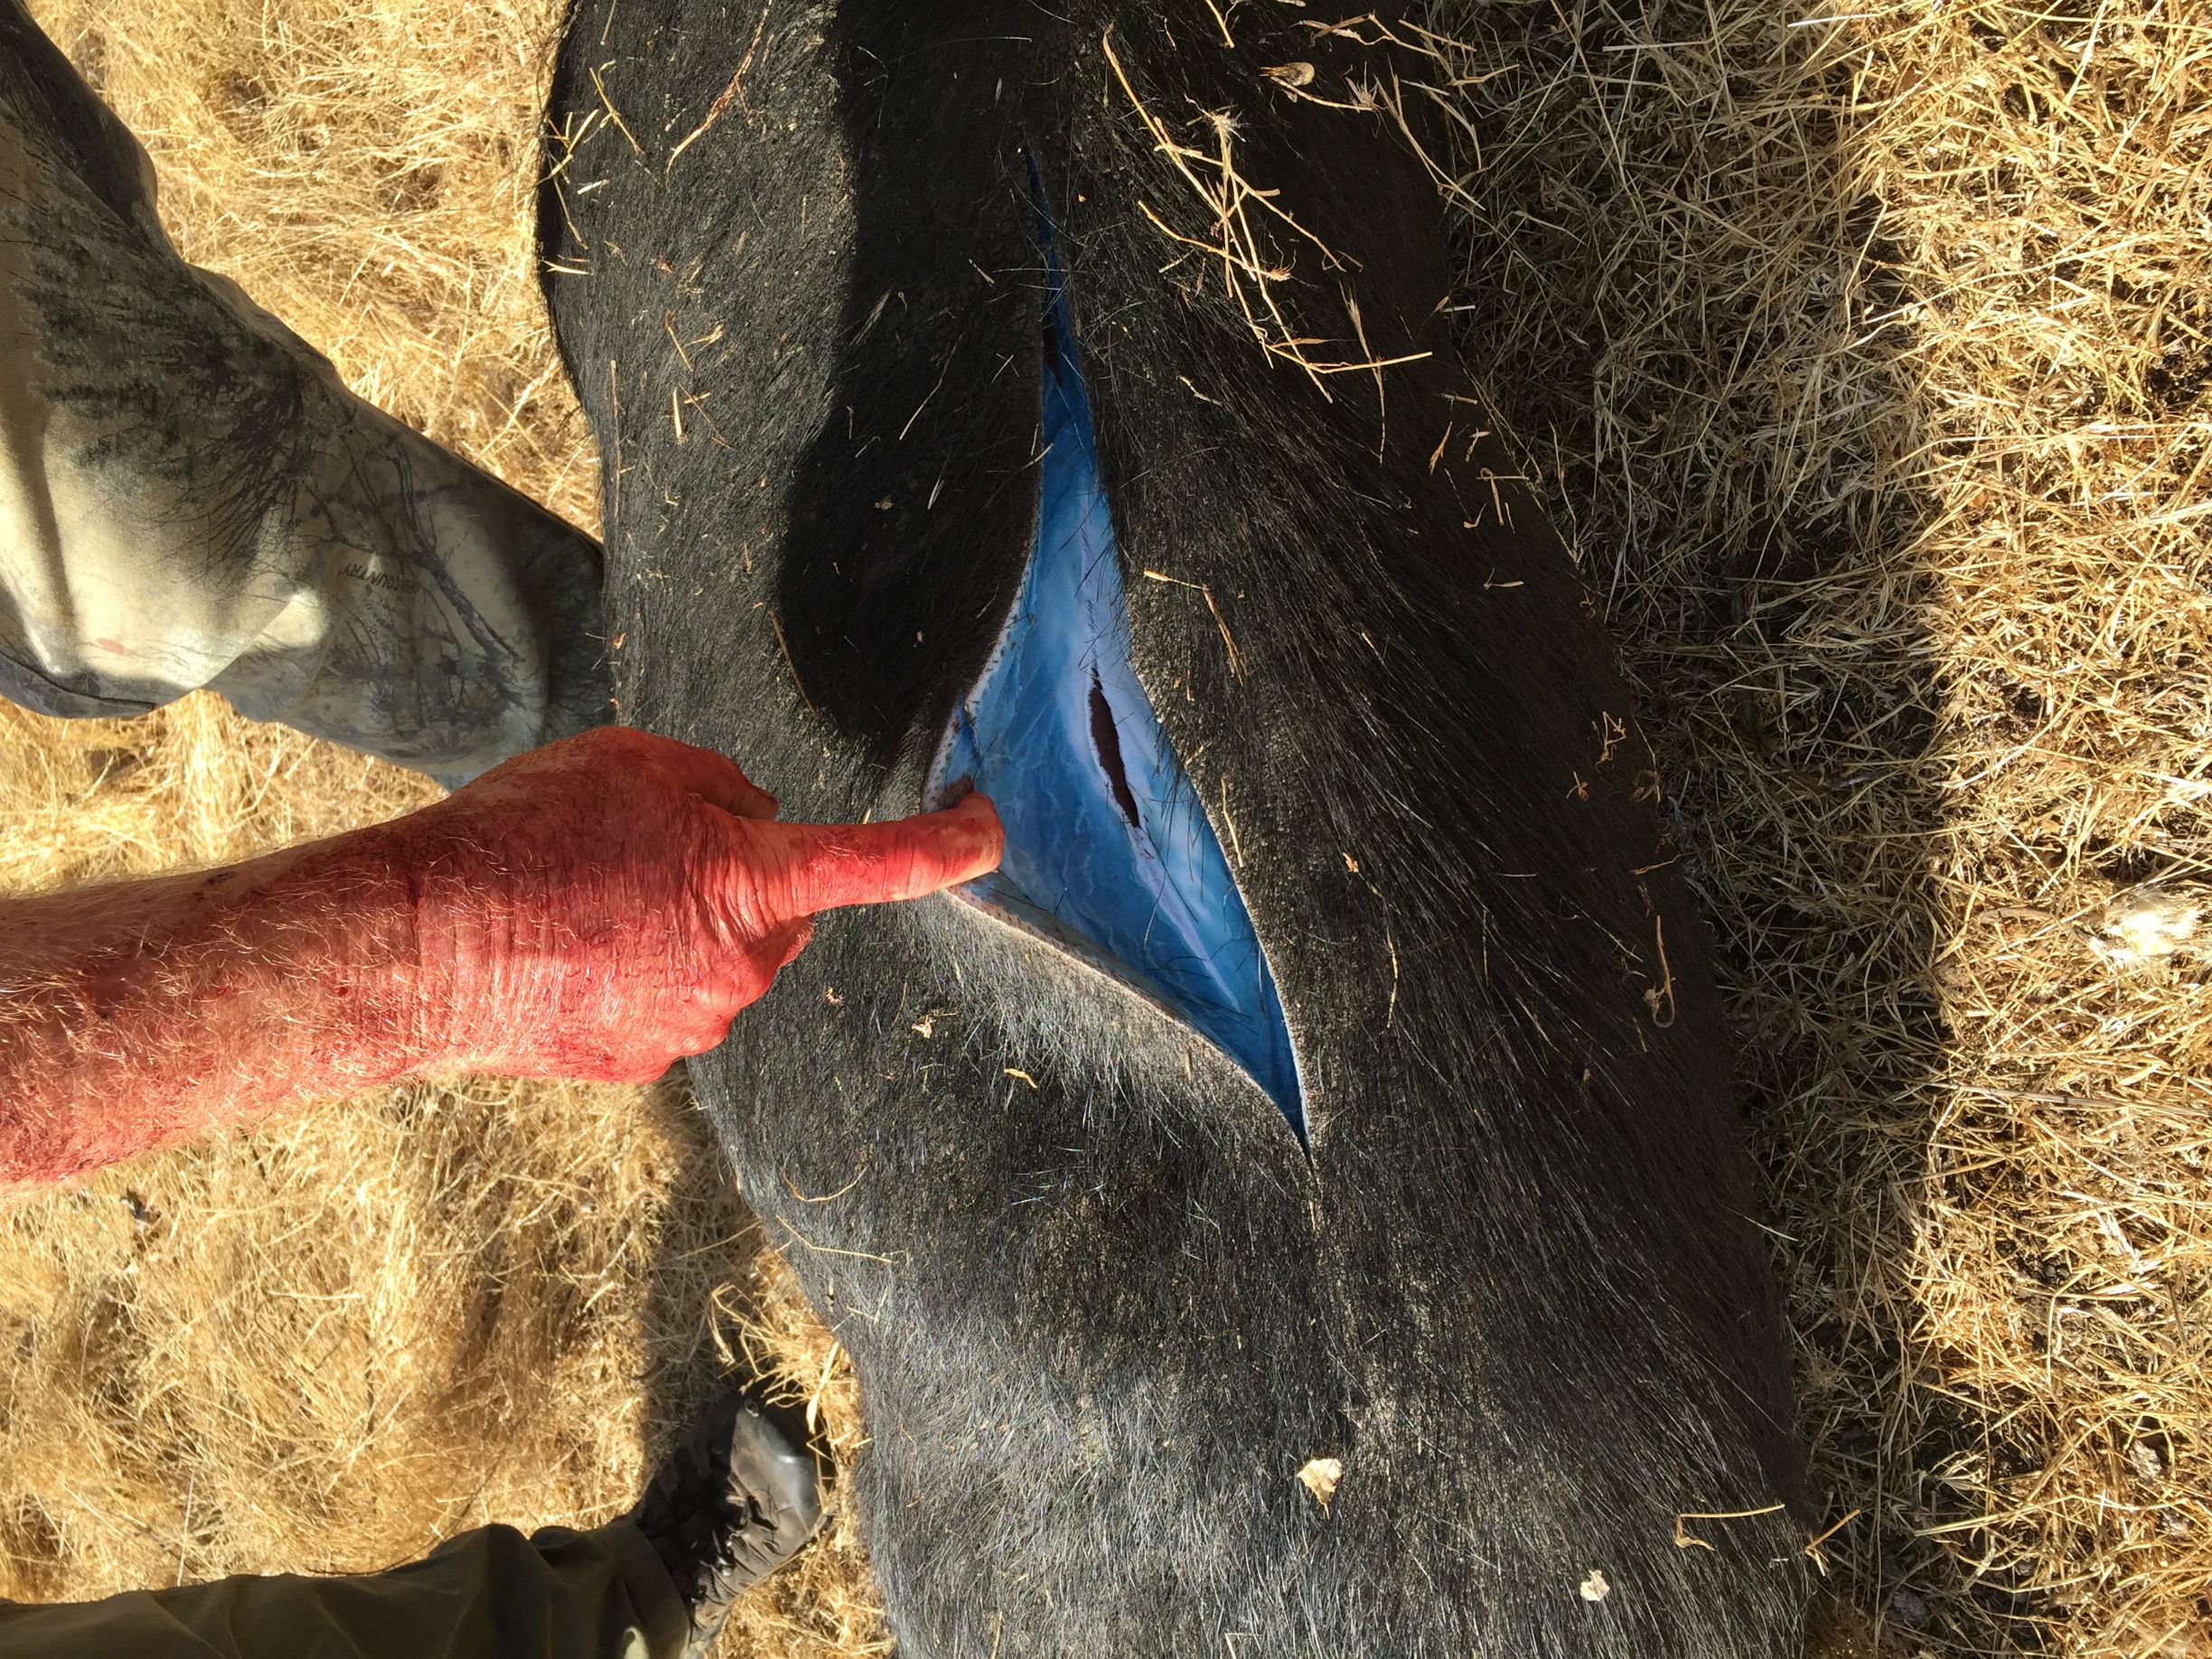 outdoorhub-photos-wild-pig-with-blue-fat-found-in-california-2015-09-10_15-26-04.jpg